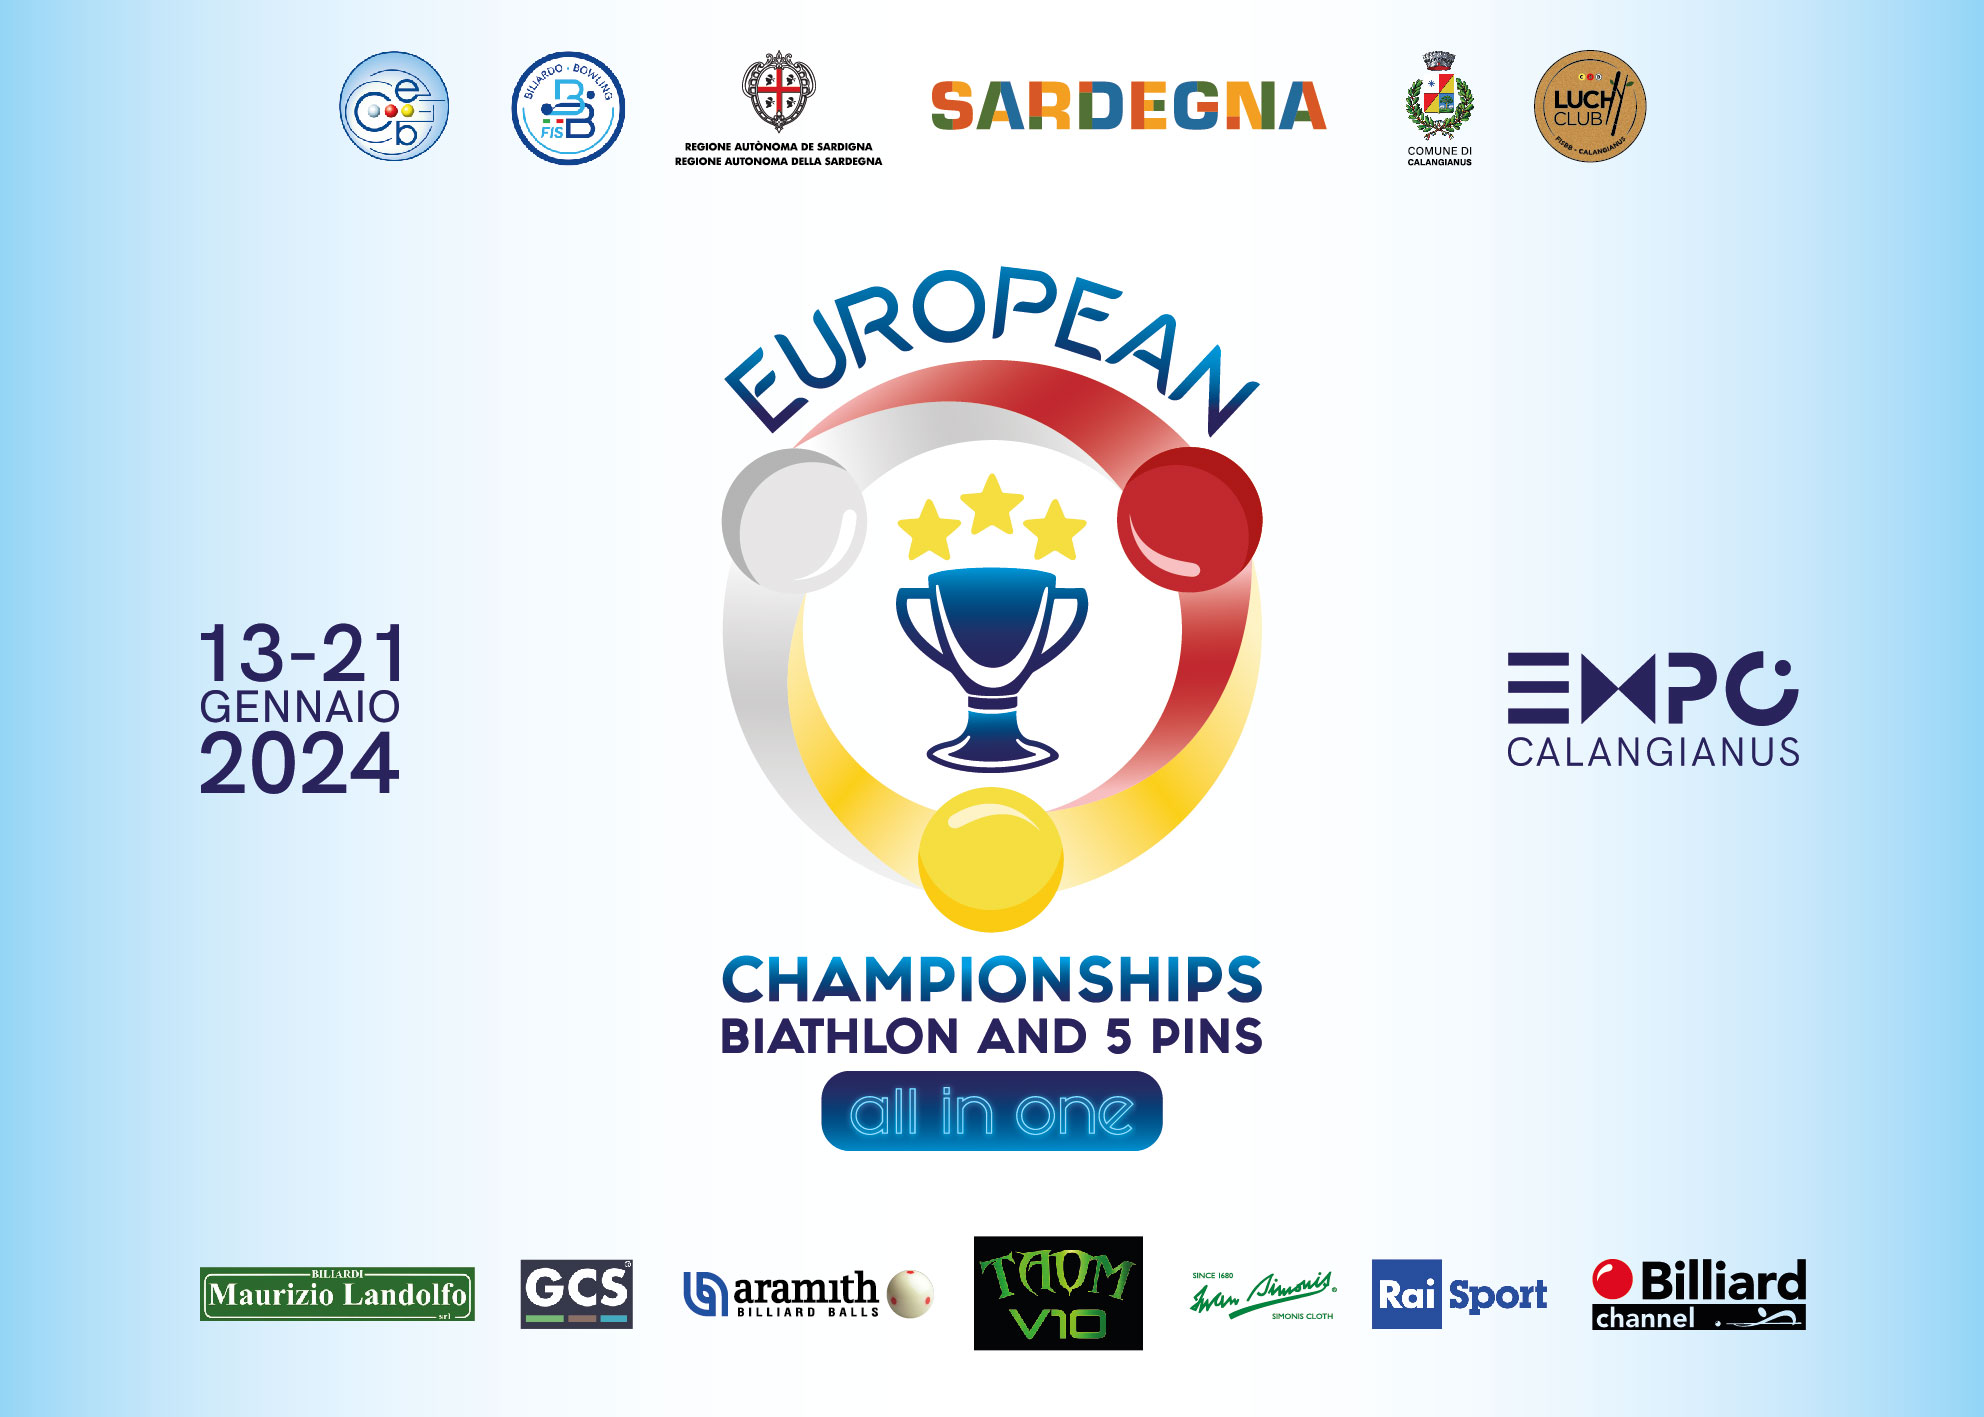 EUROPEAN CHAMPIONSHIPS BIATHLON AND 5-PINS “ALL IN ONE”.. CI SIAMO!